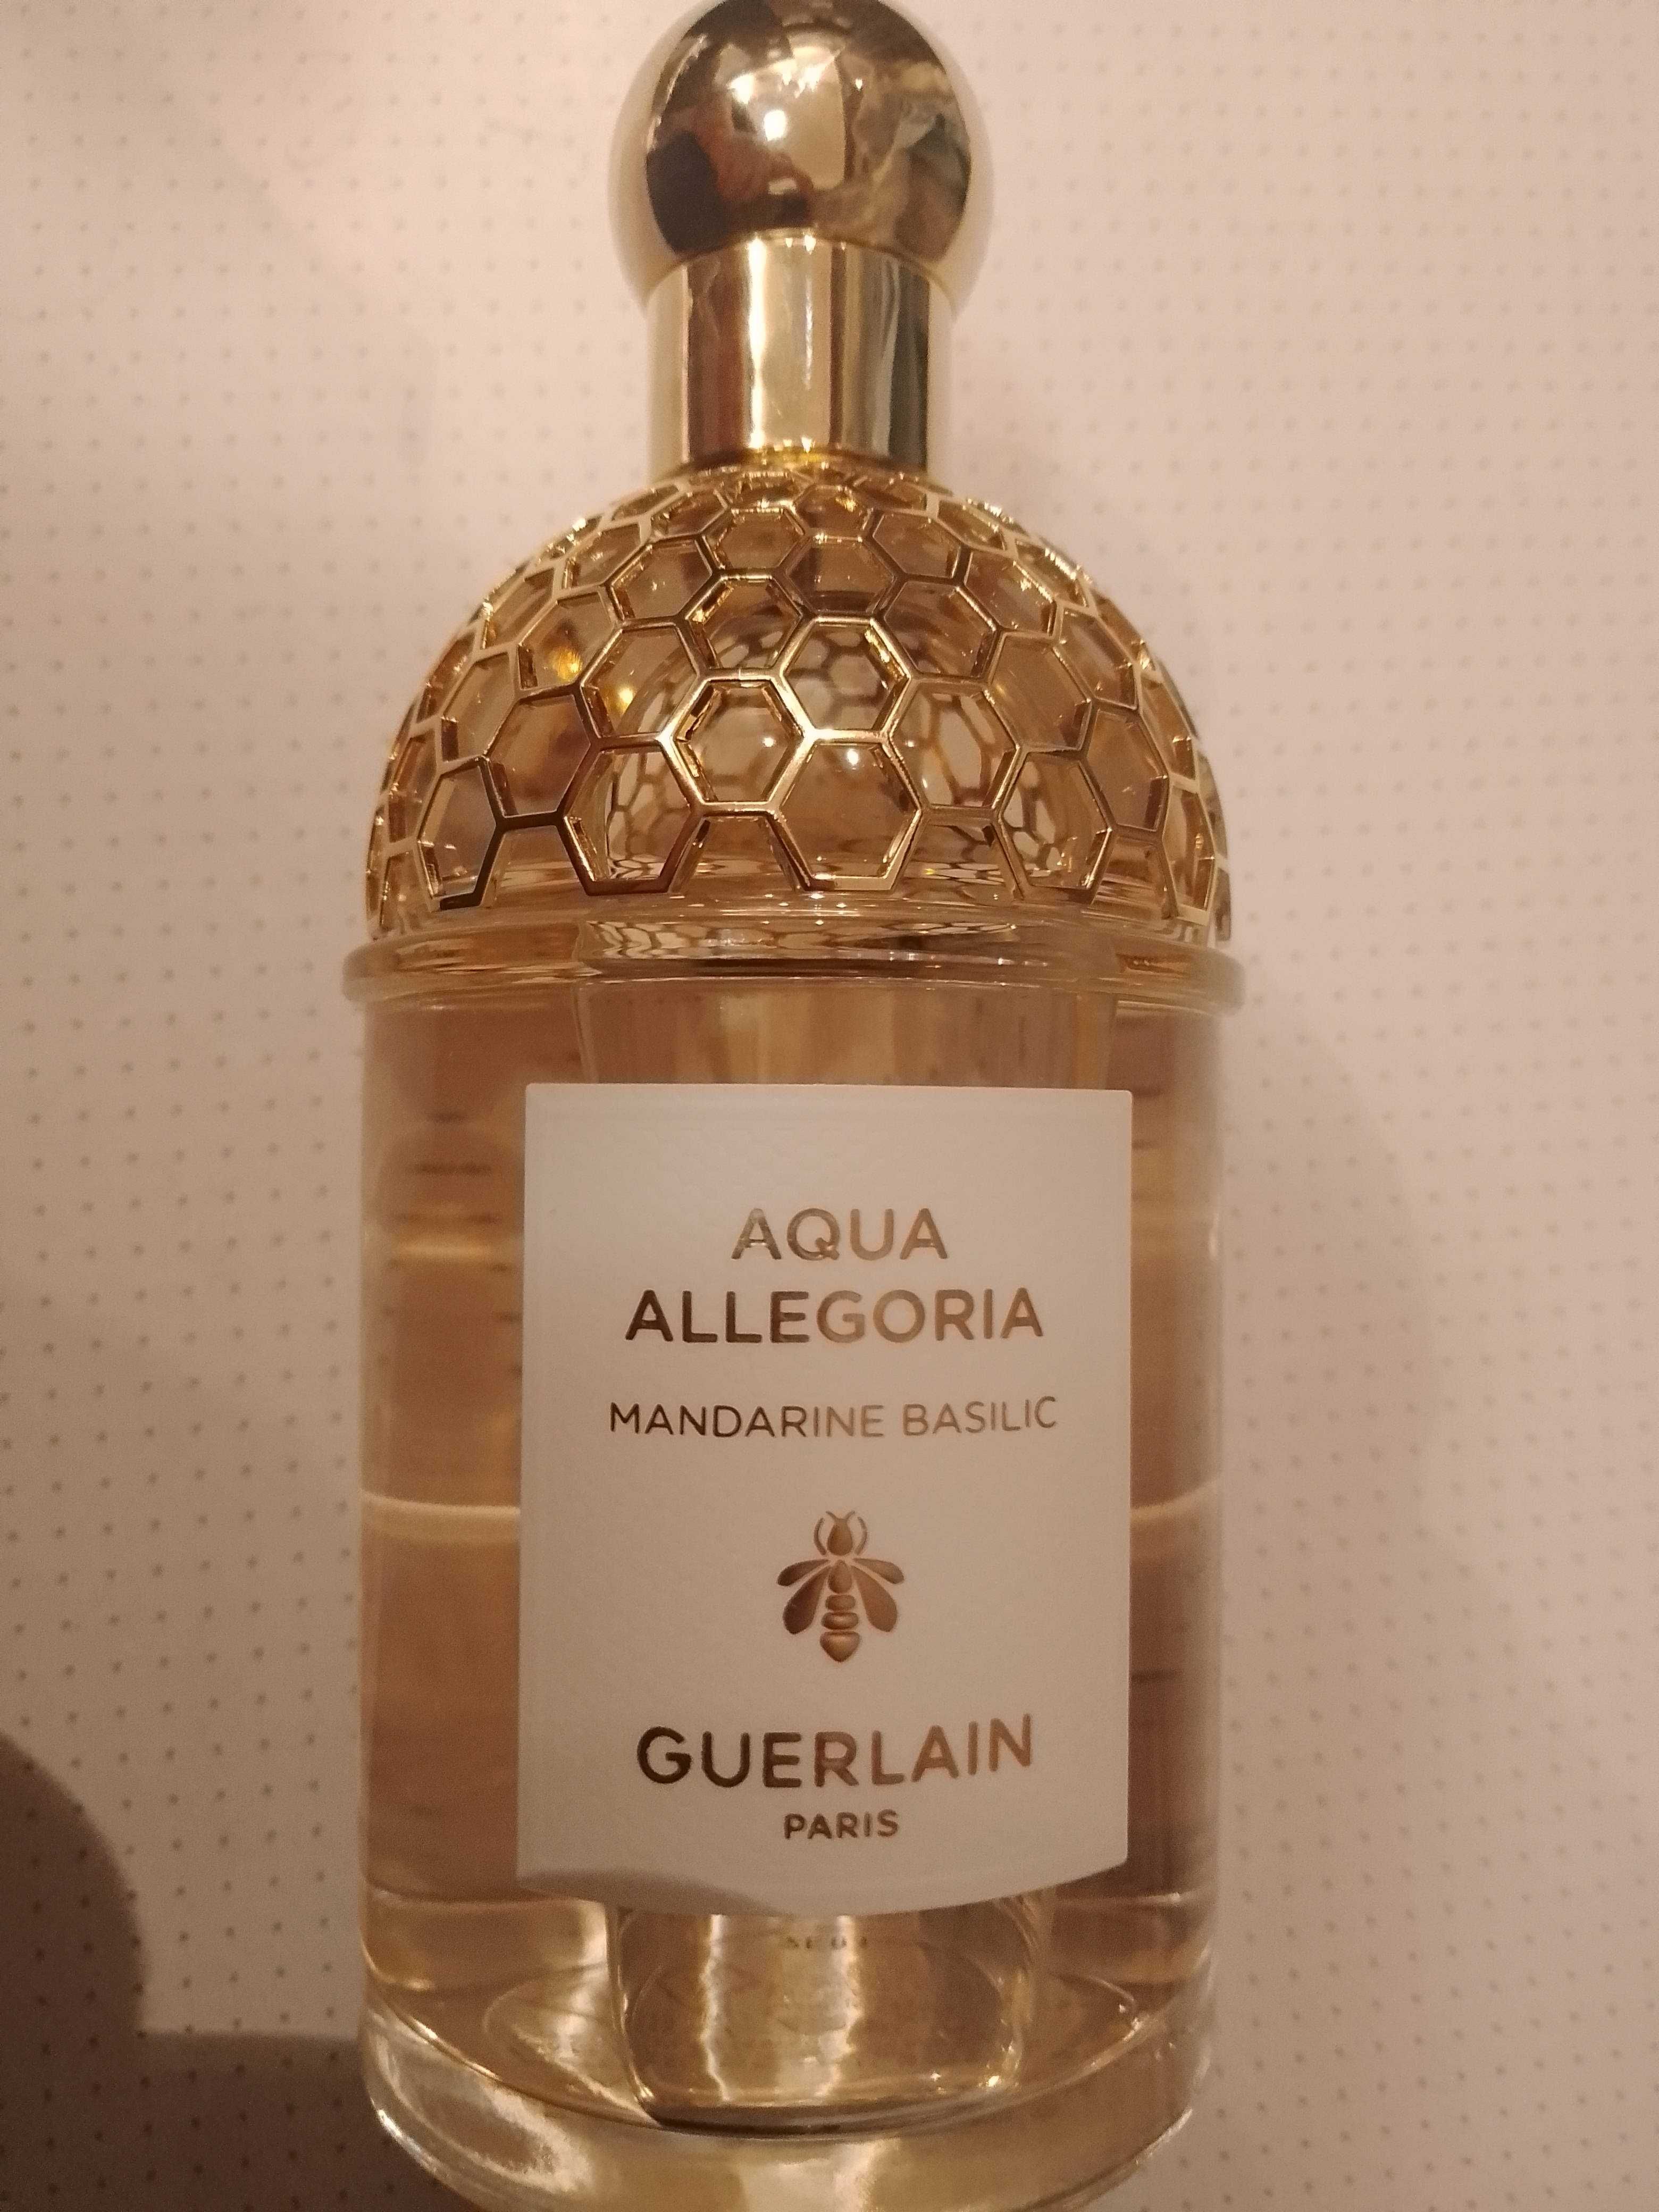 Aqua Allegoria Mandarine Basilic Guerlain zapach kultowy 125 ml Nowy